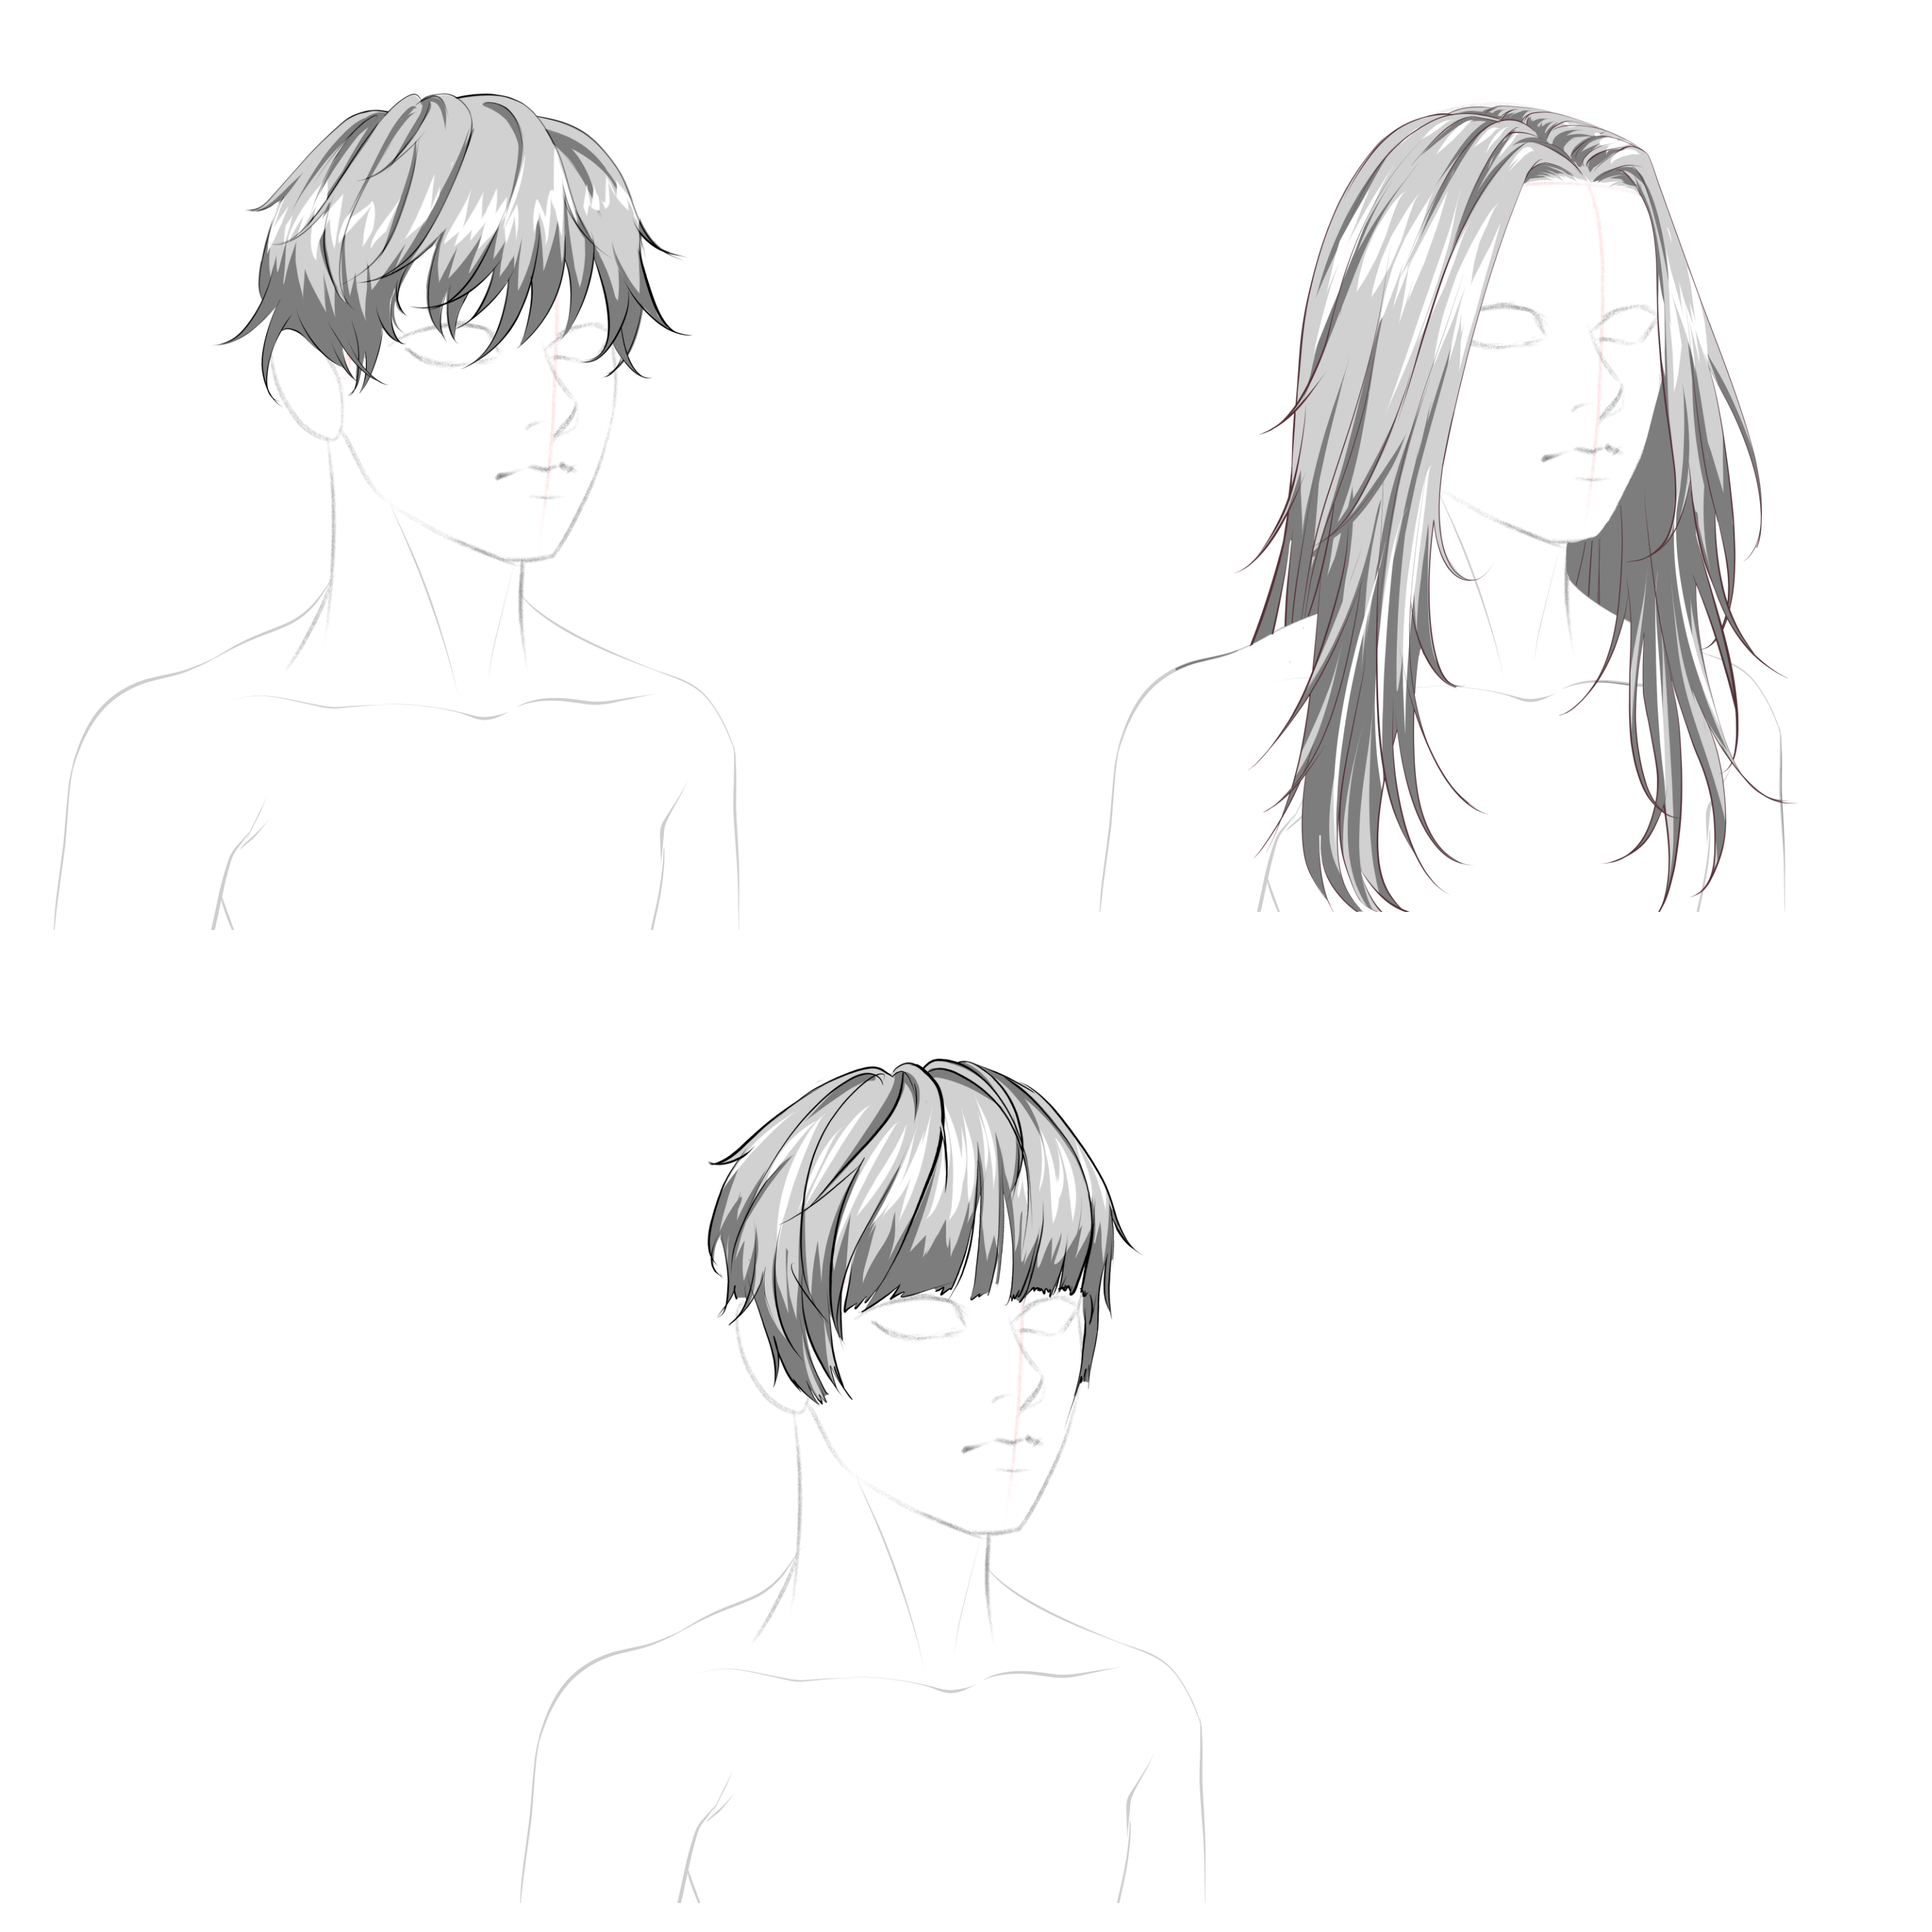 How To Draw Female Hairstyles | Anime & Manga (Basics) | Pigliicorn |  Skillshare